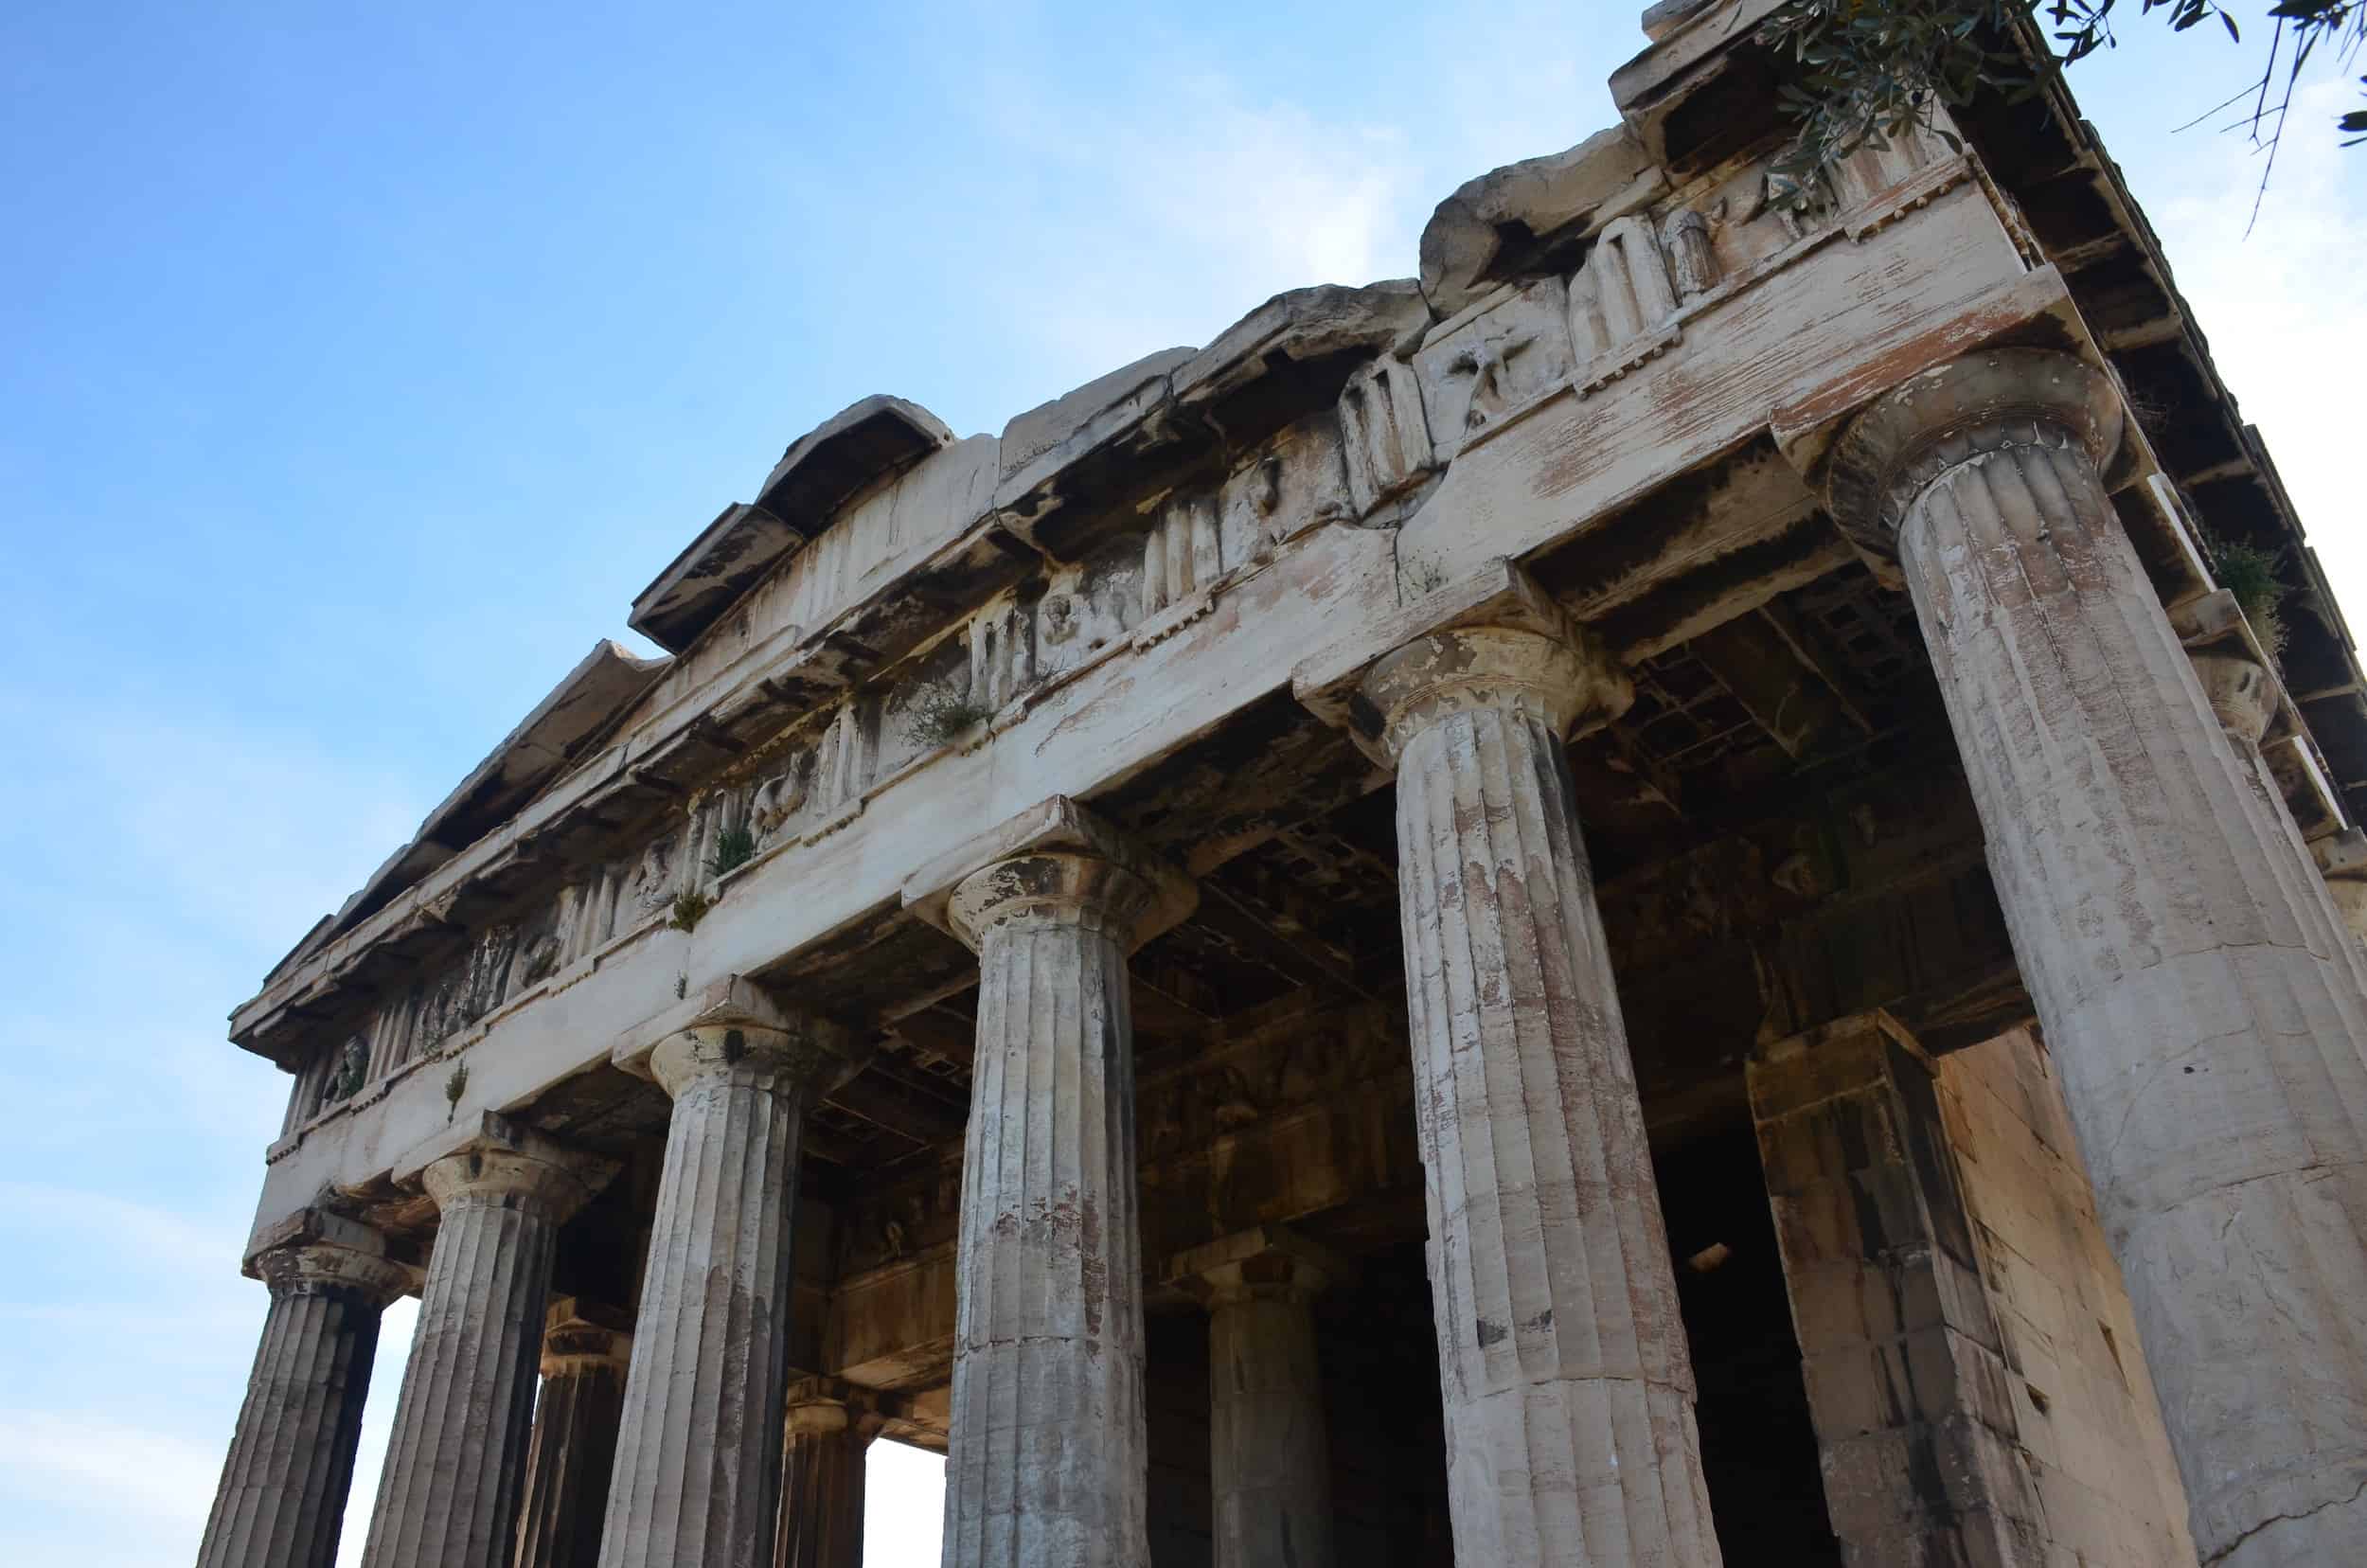 East side of the Temple of Hephaestus